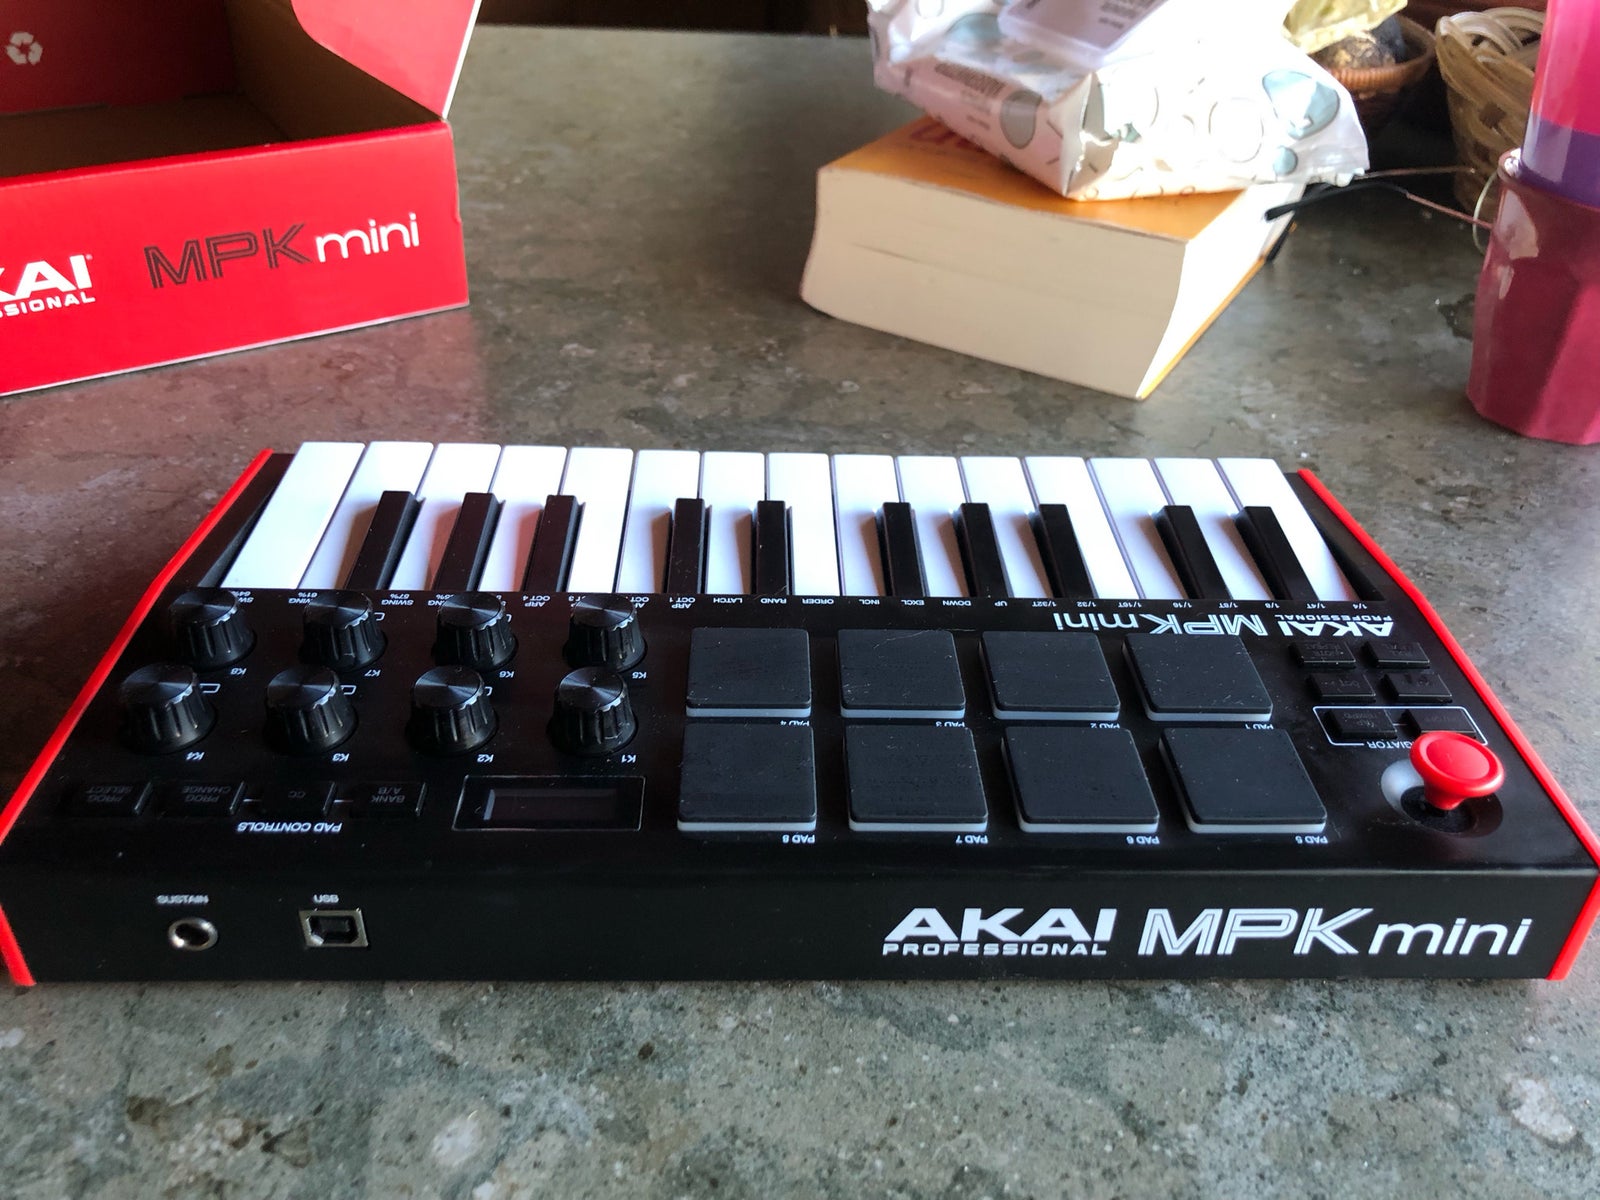 USB keyboard, Akai Mpkmini